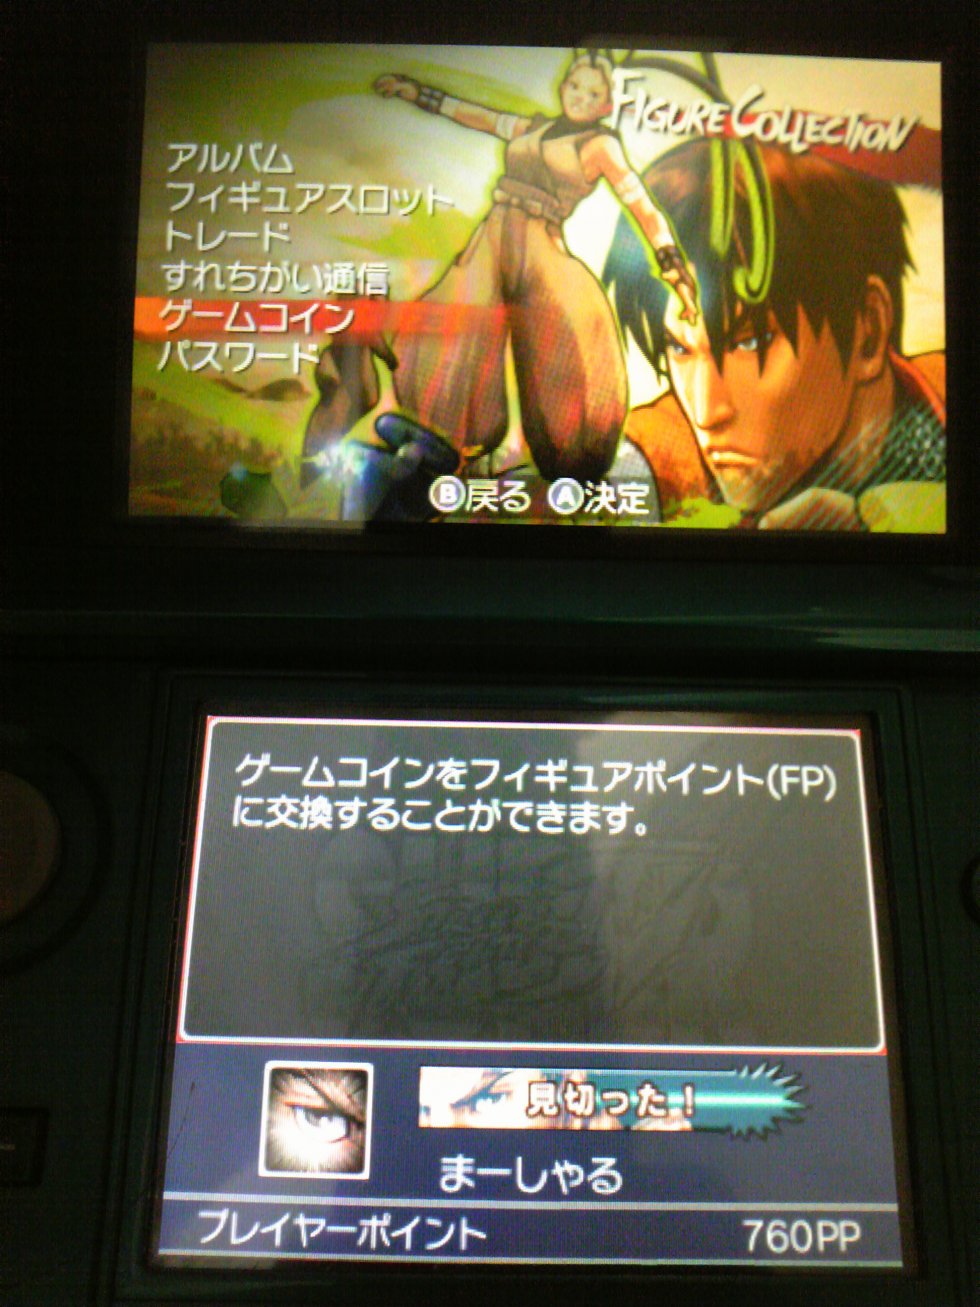 Super Street Fighter IV 3D Edition DLC Japon Mars 2011  (1)